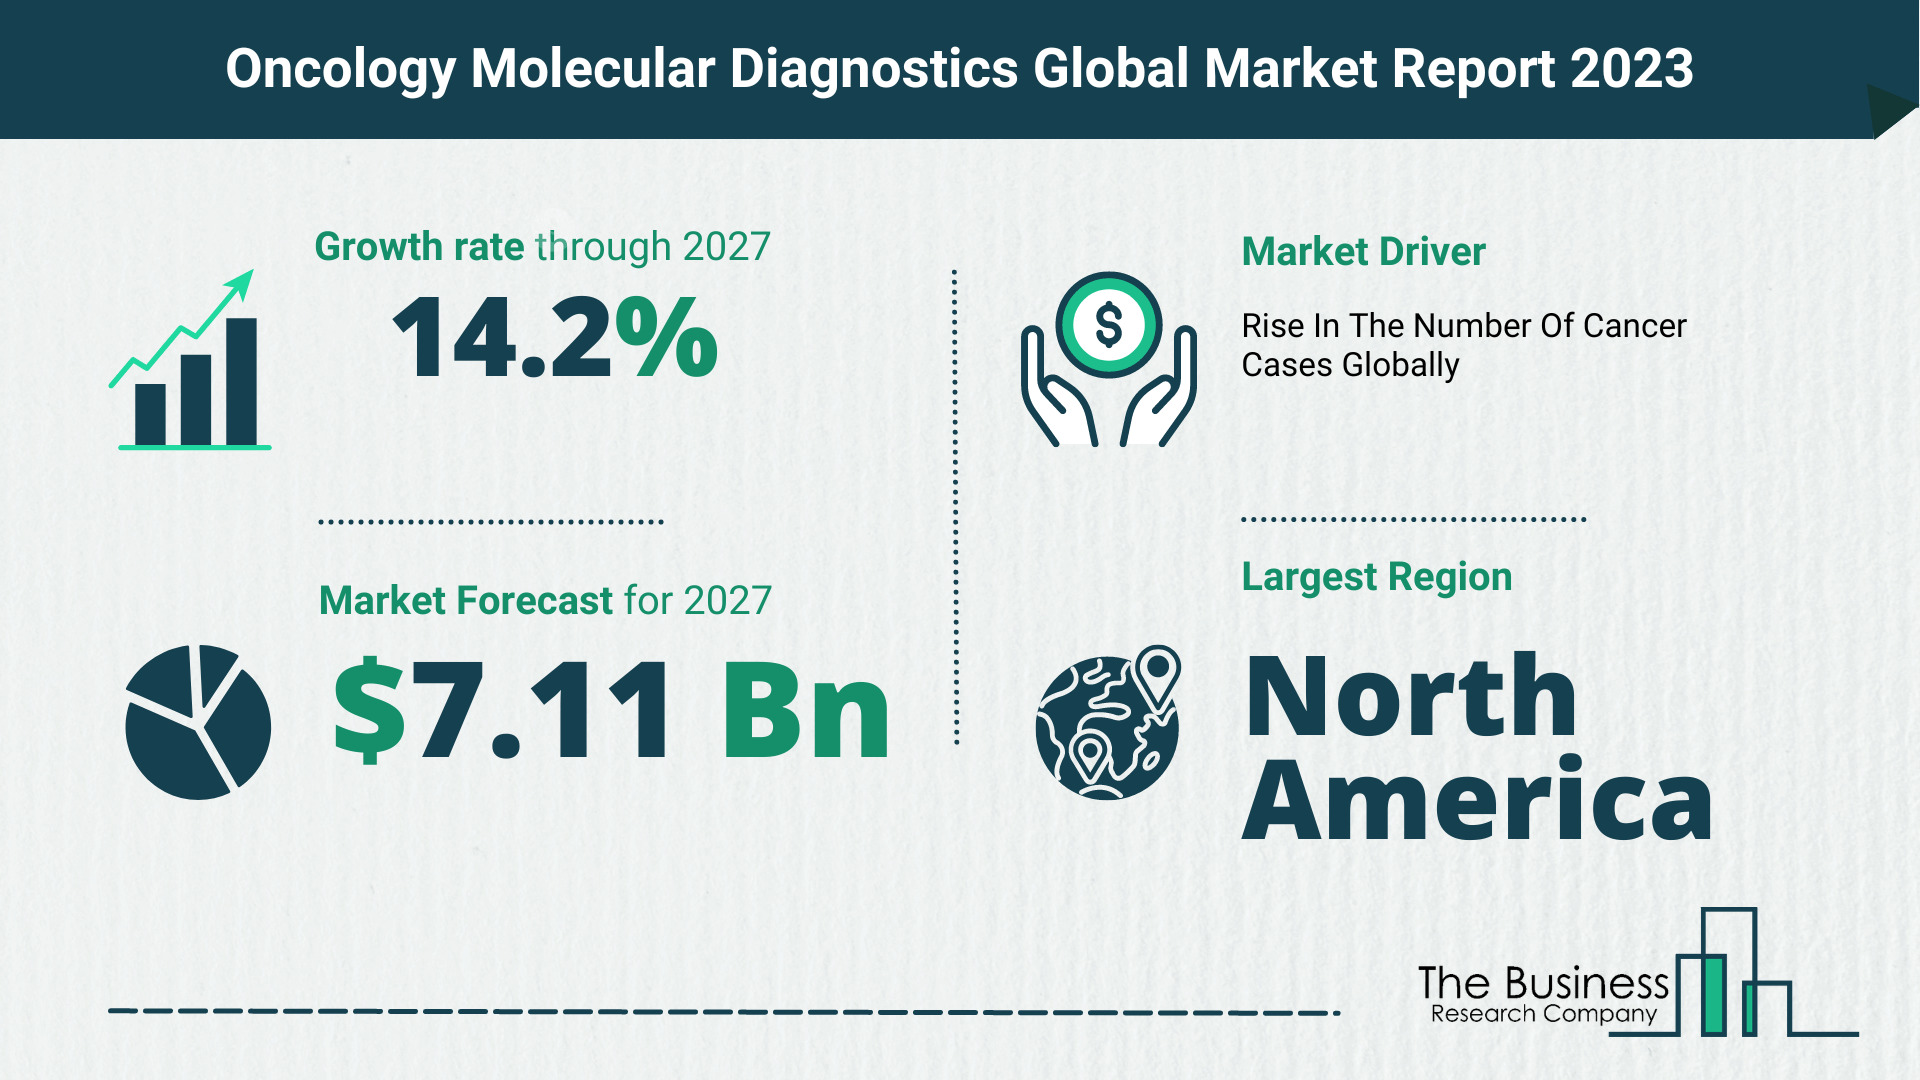 Global Oncology Molecular Diagnostics Market